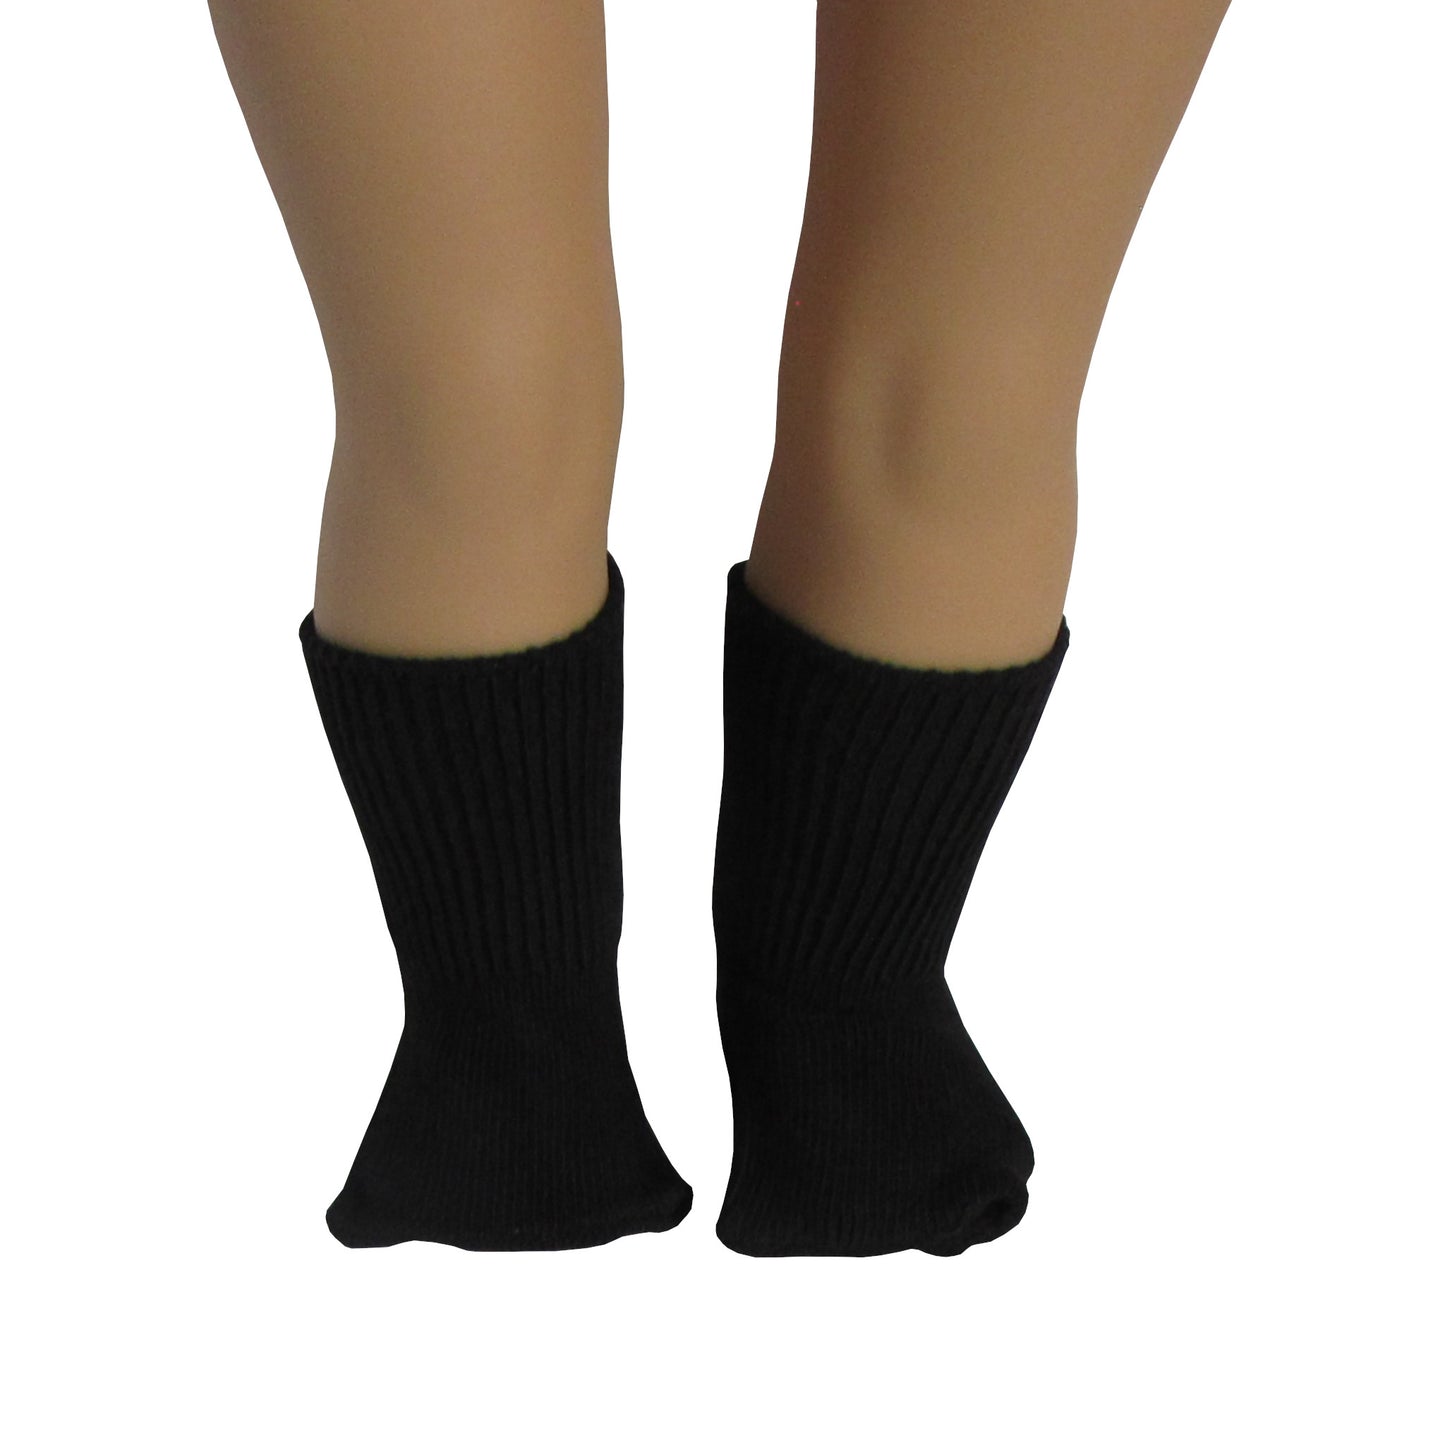 Black Sport Socks for 18-inch dolls with Doll